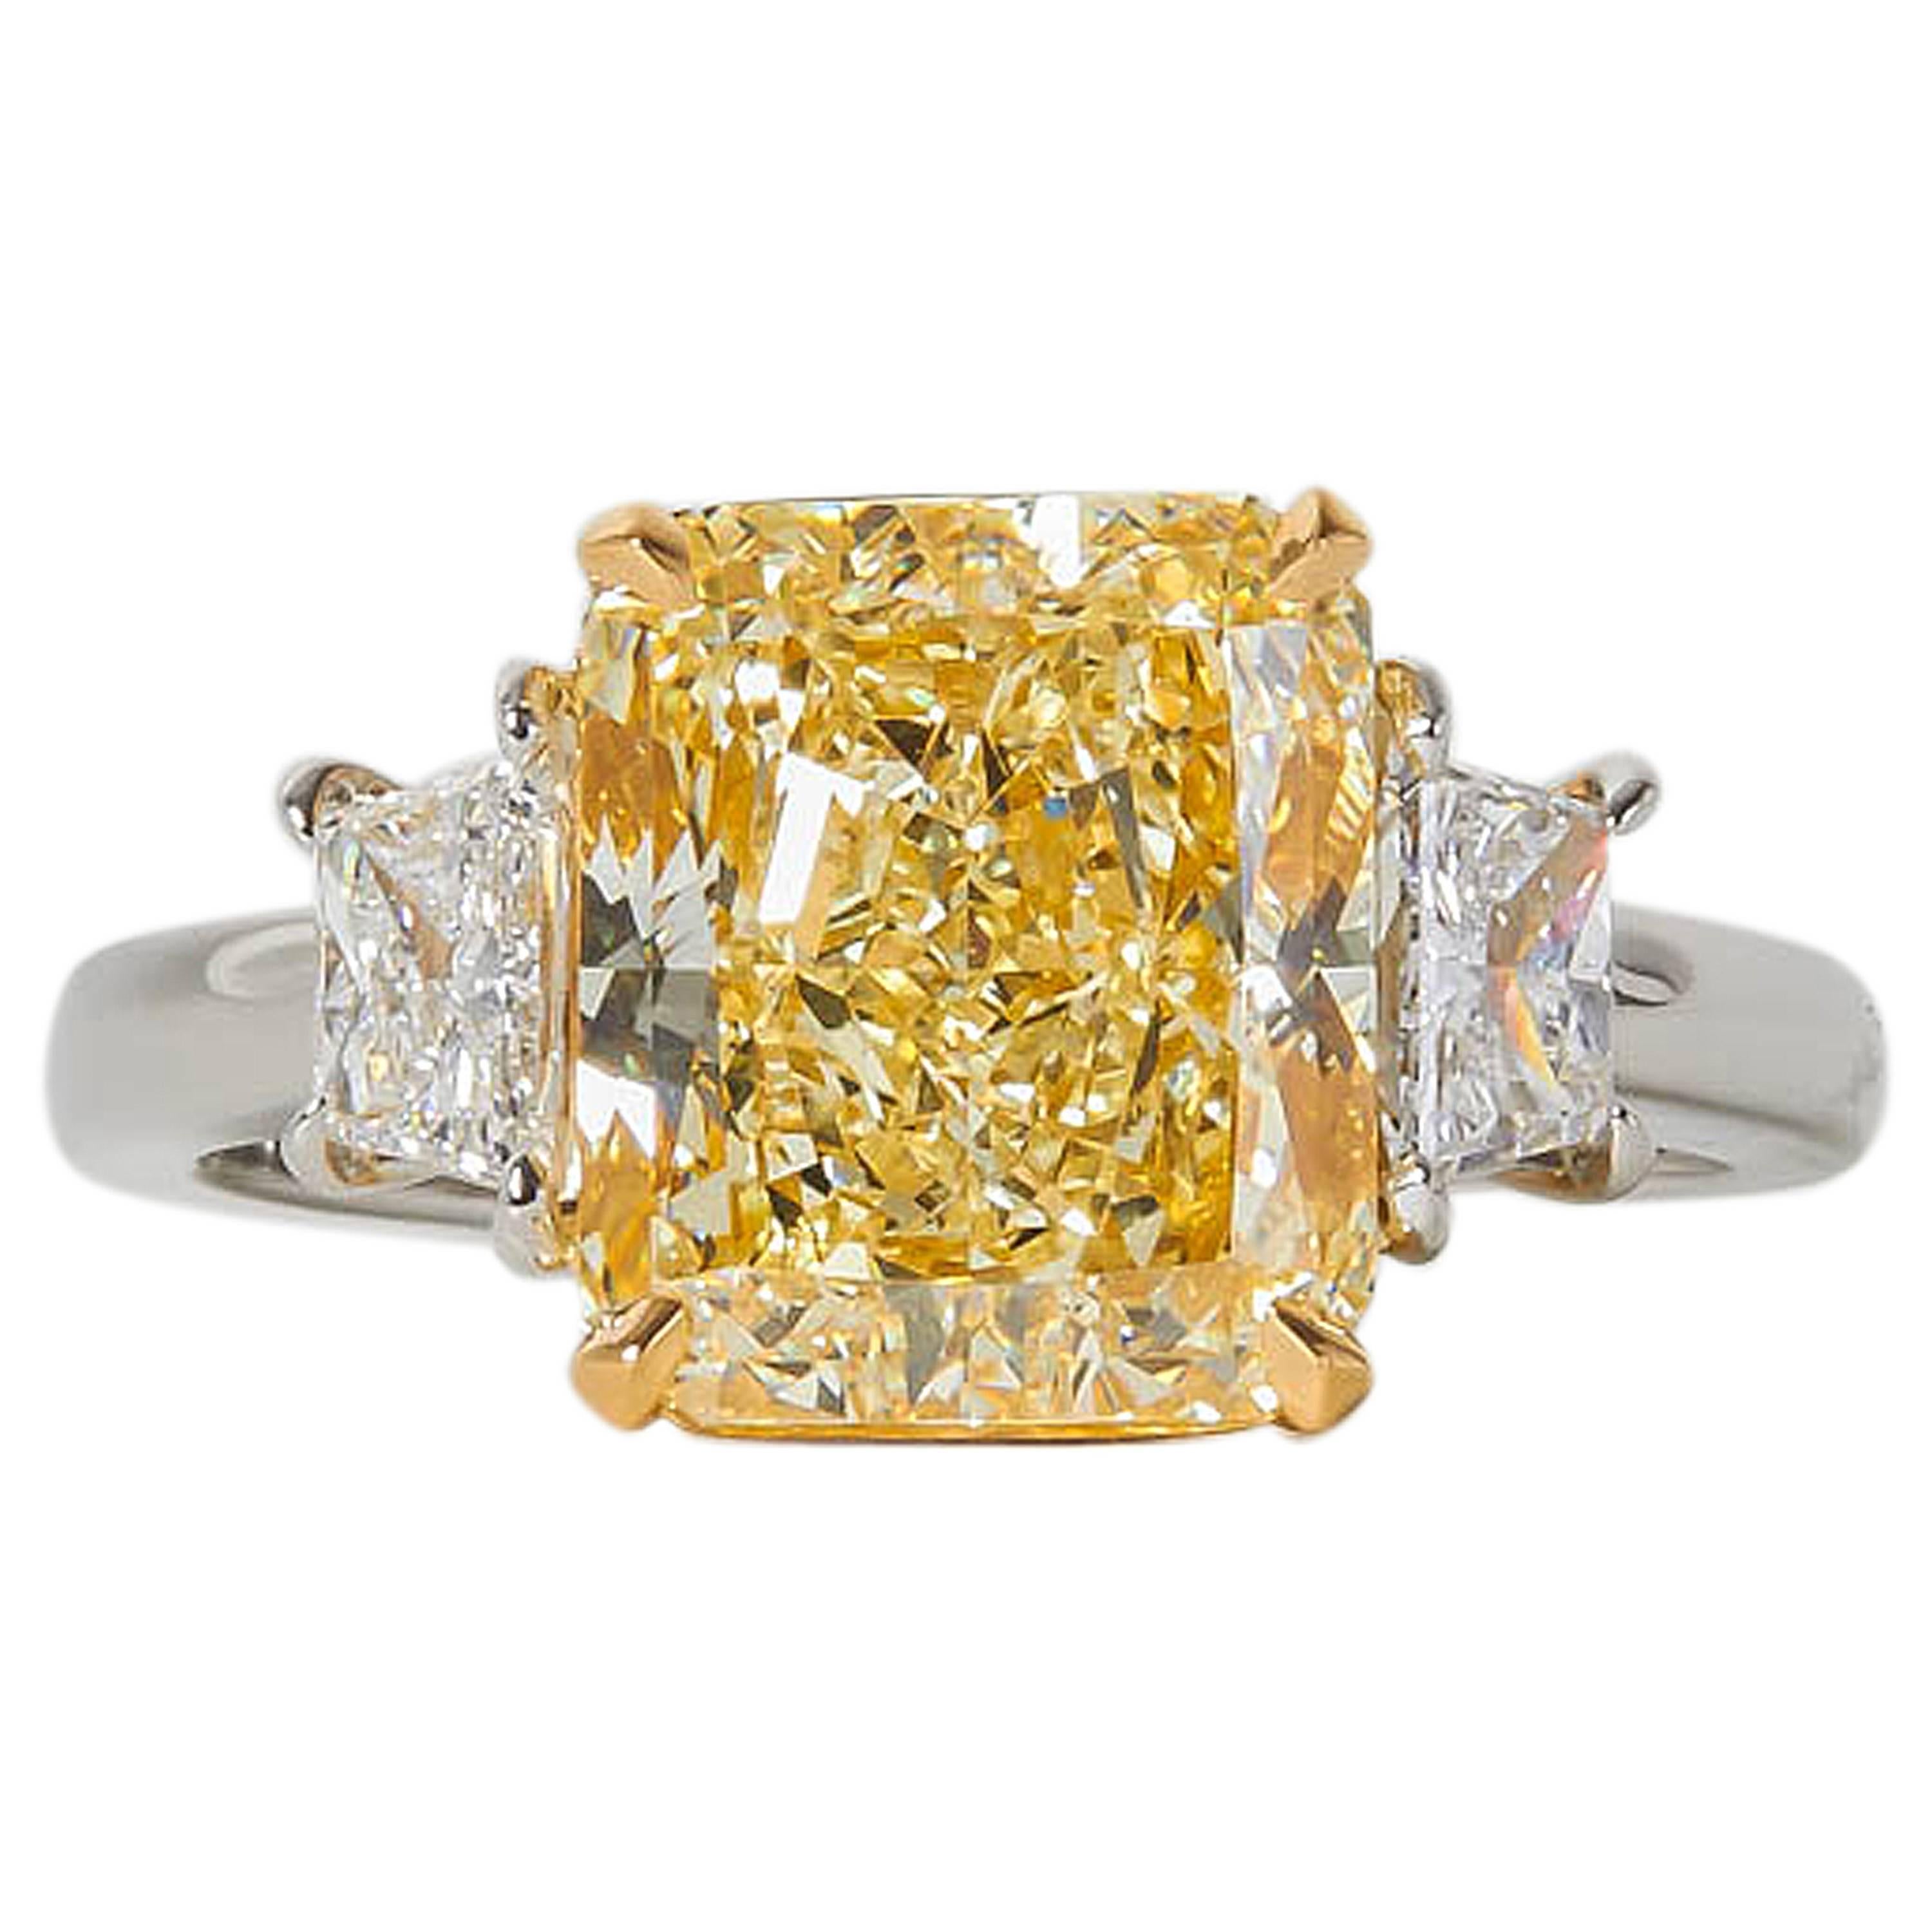 4 carat GIA certified Fancy Light Yellow Diamond Platinum Ring